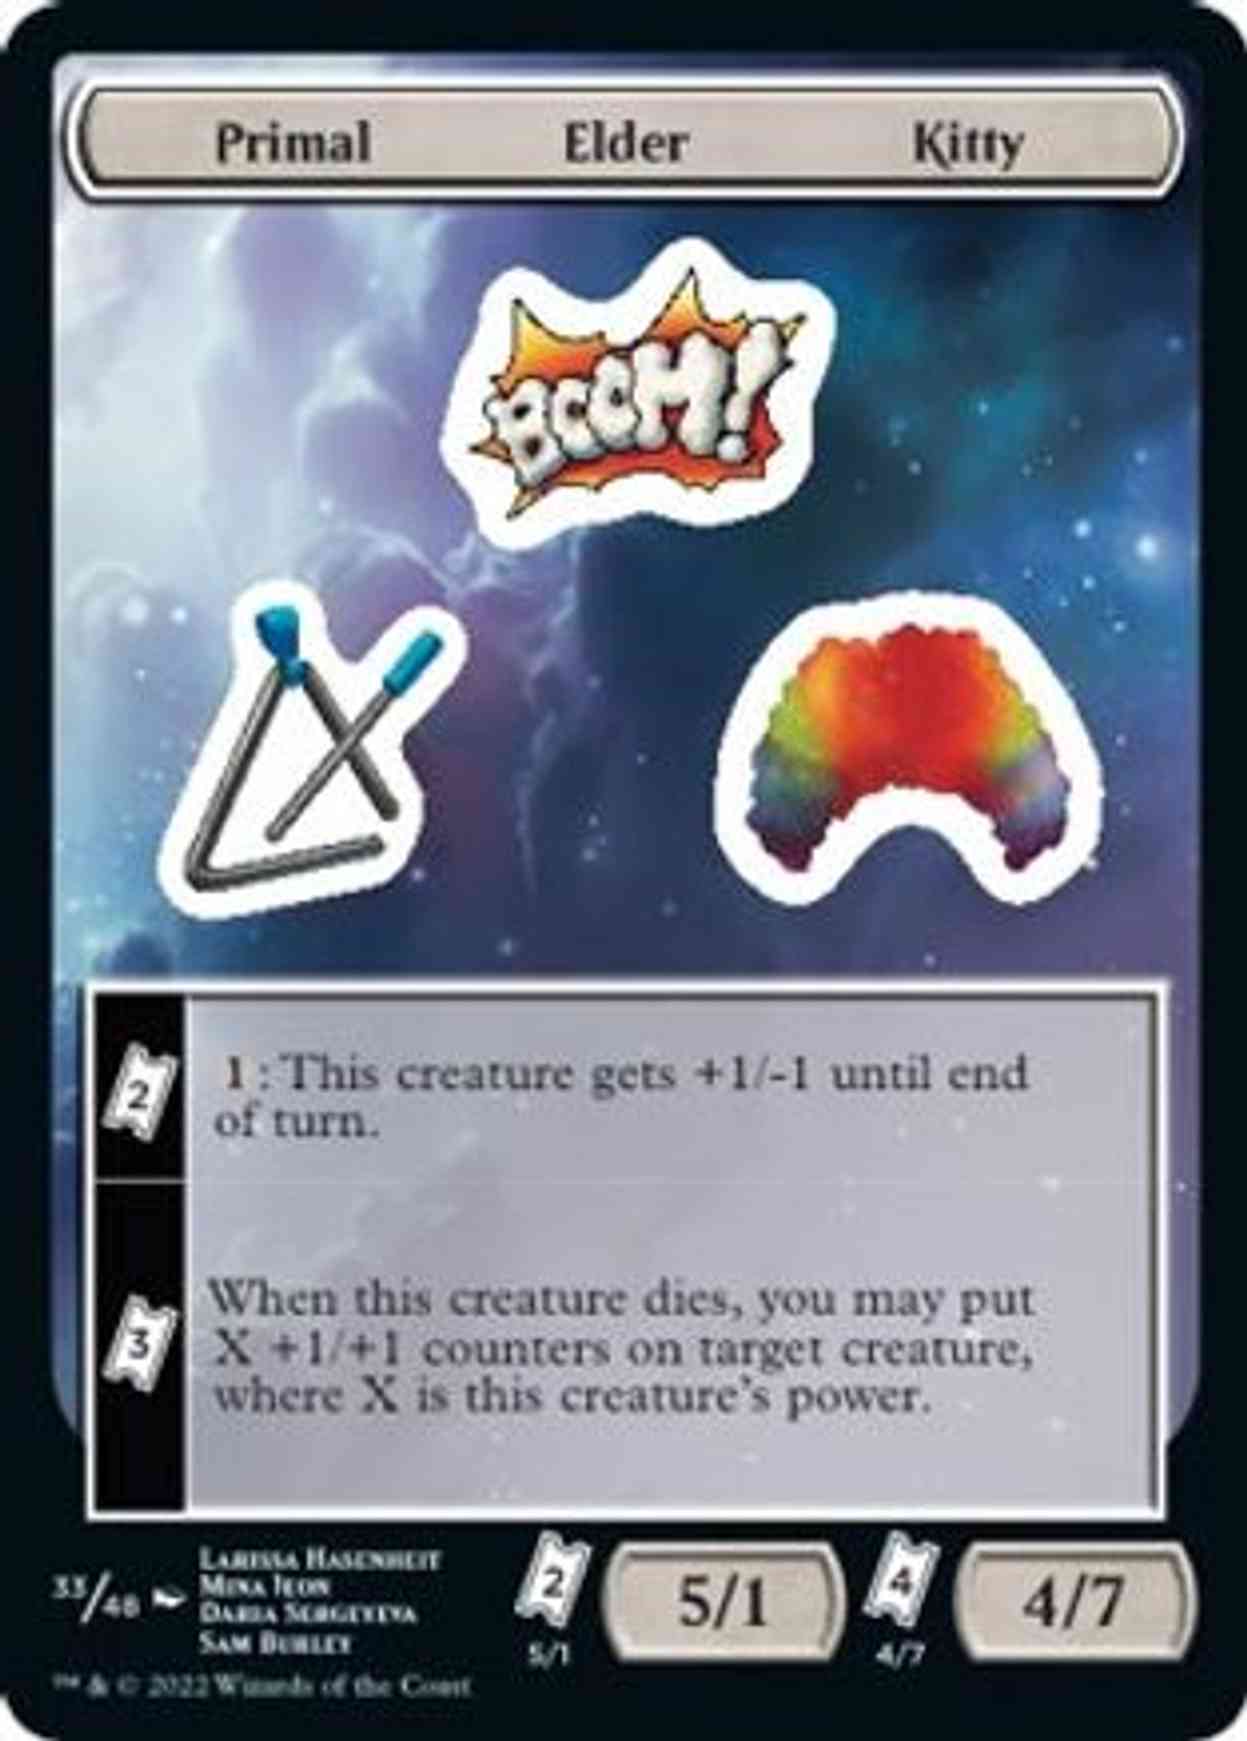 Primal Elder Kitty magic card front